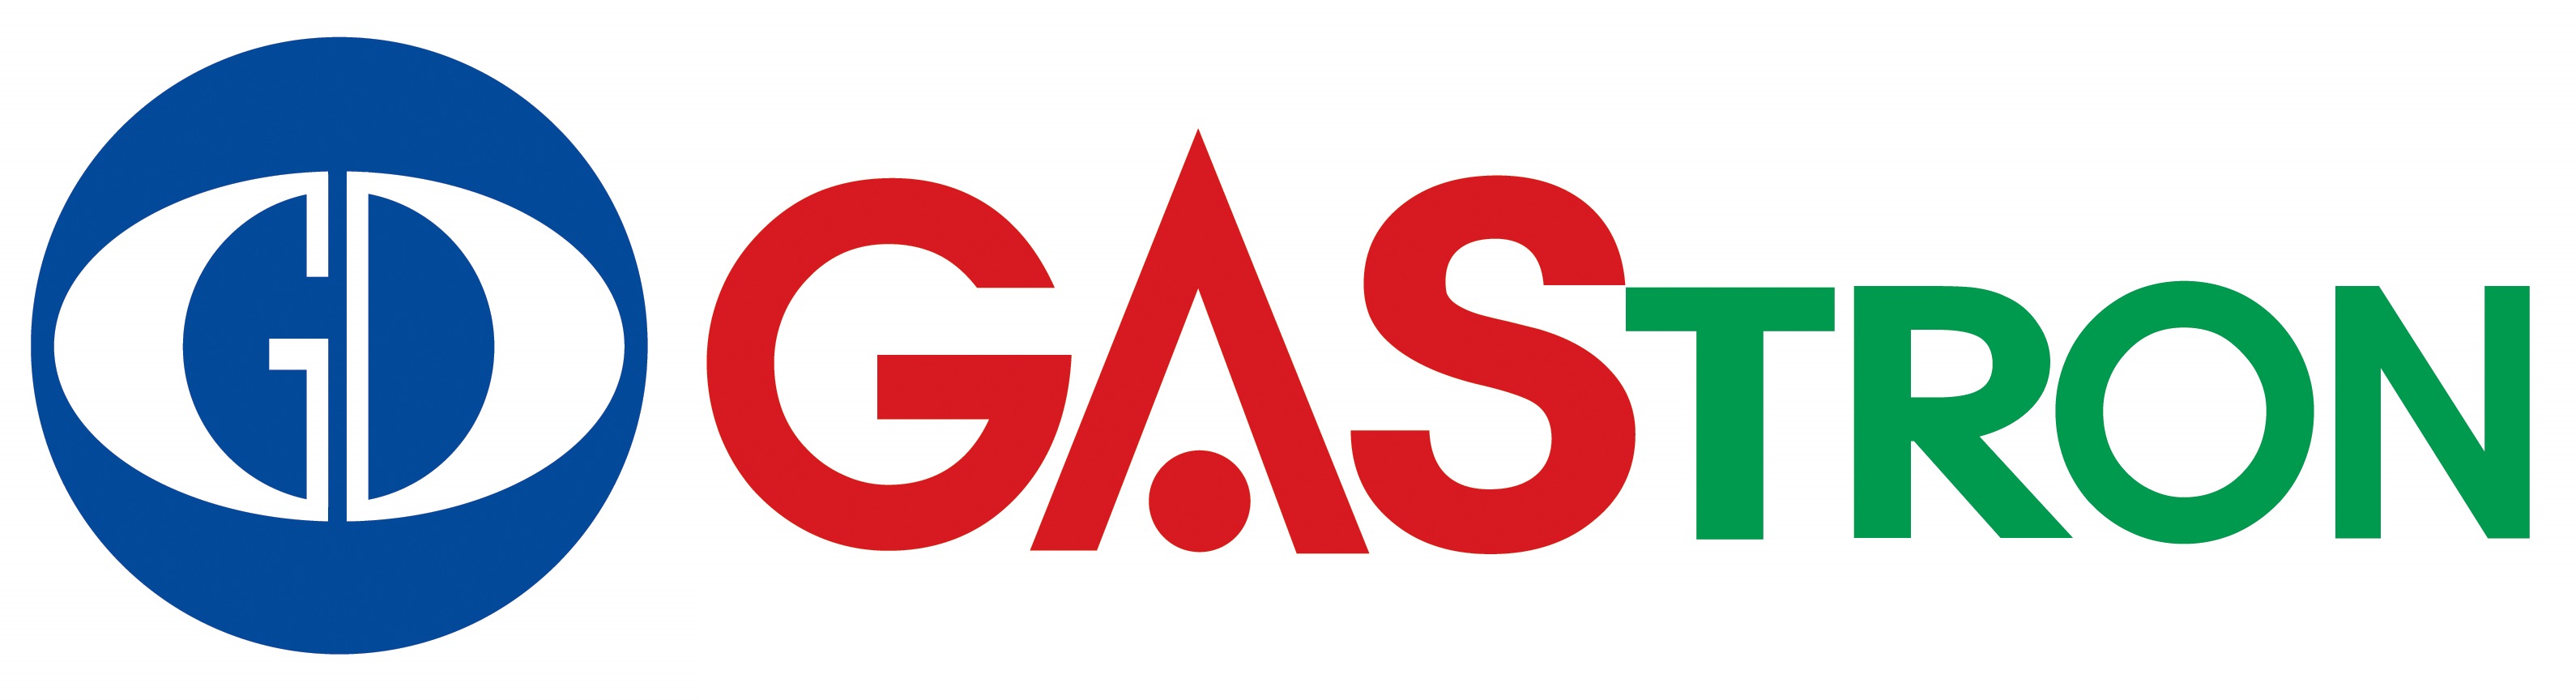 Gastron-logo_JPG-file